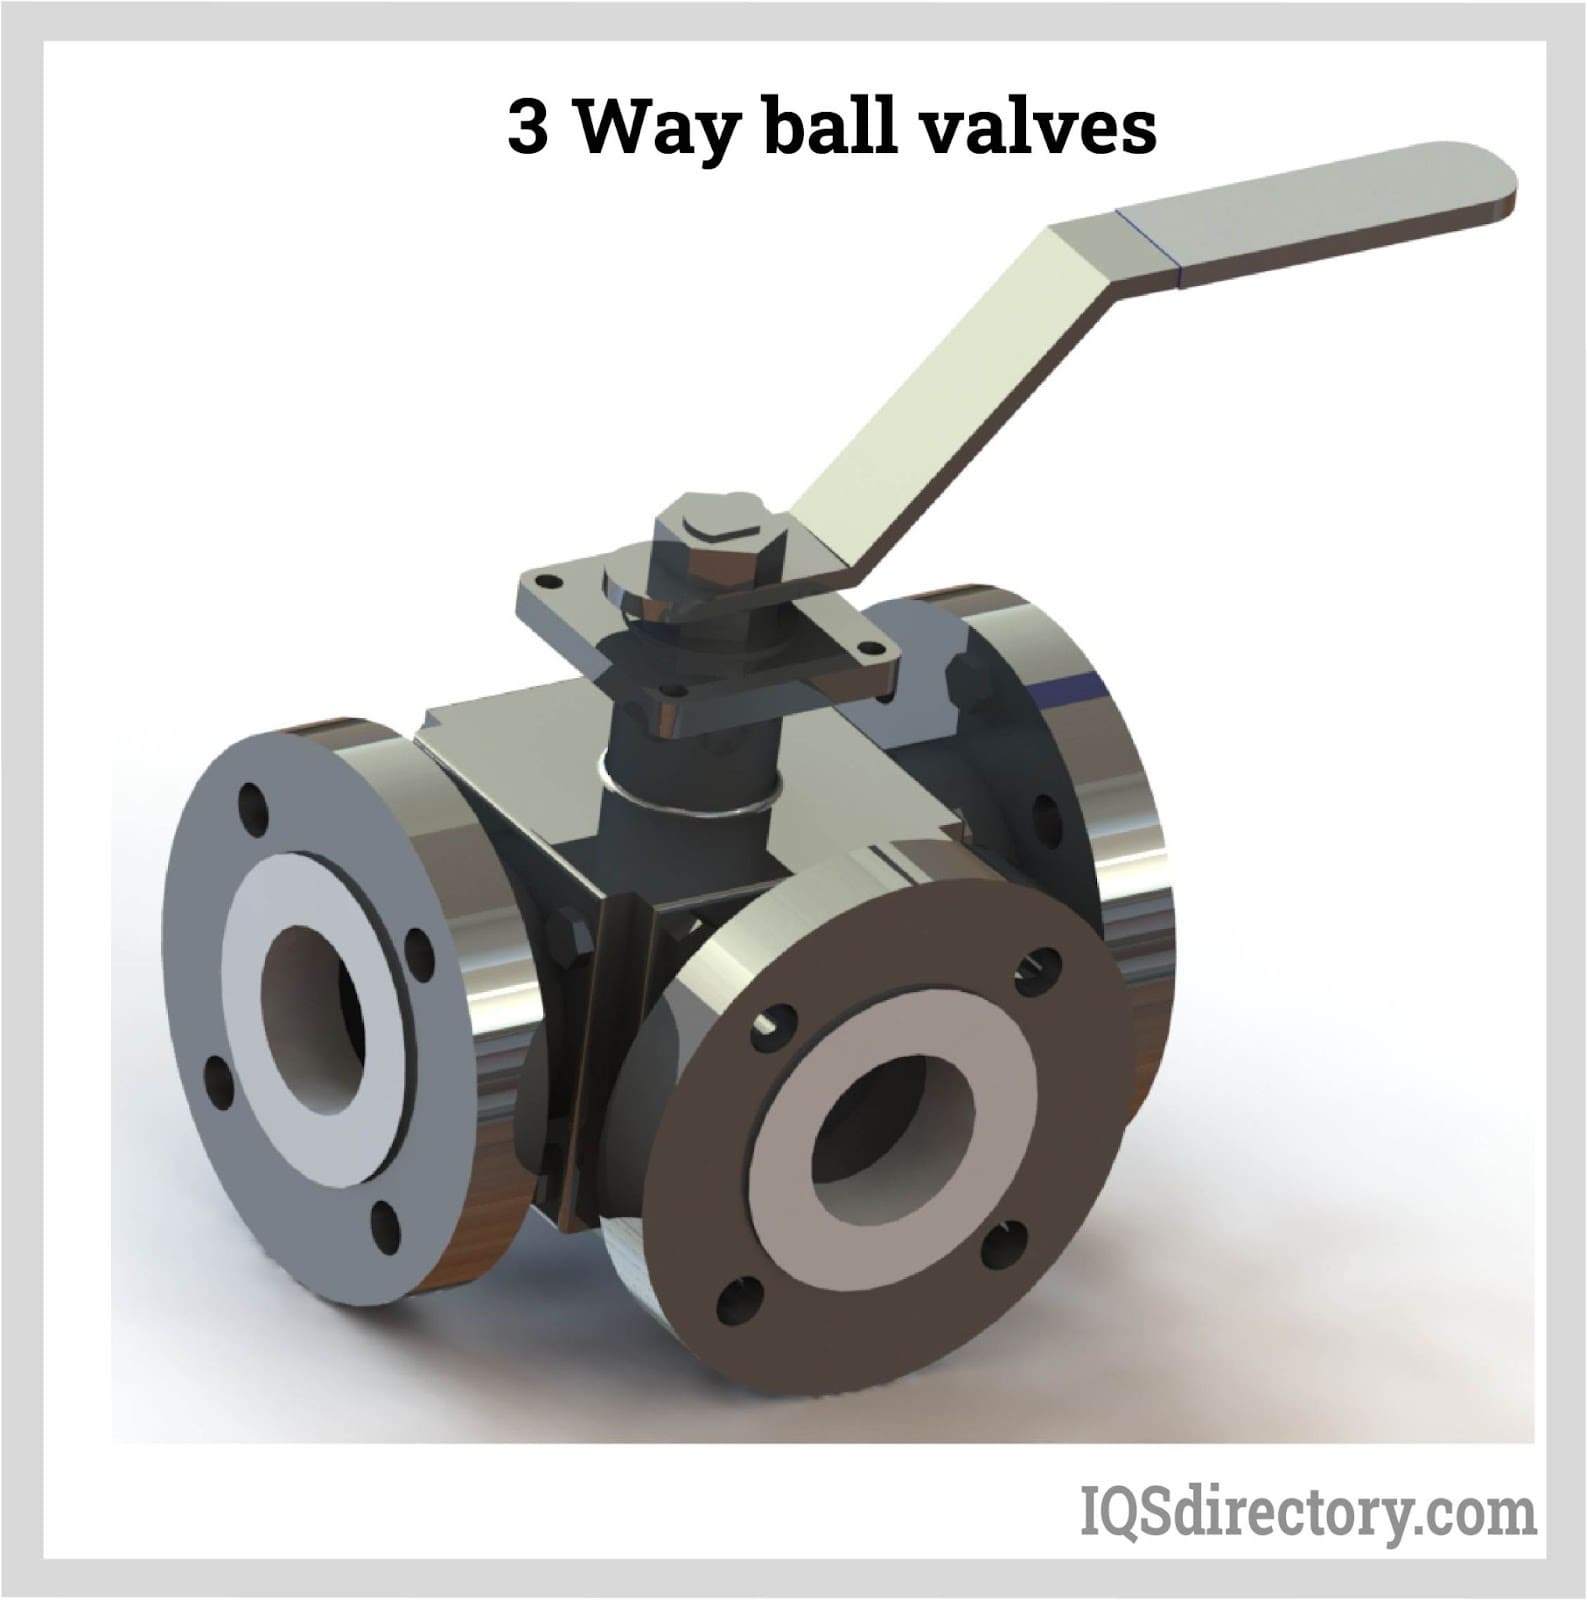 3 way ball valves